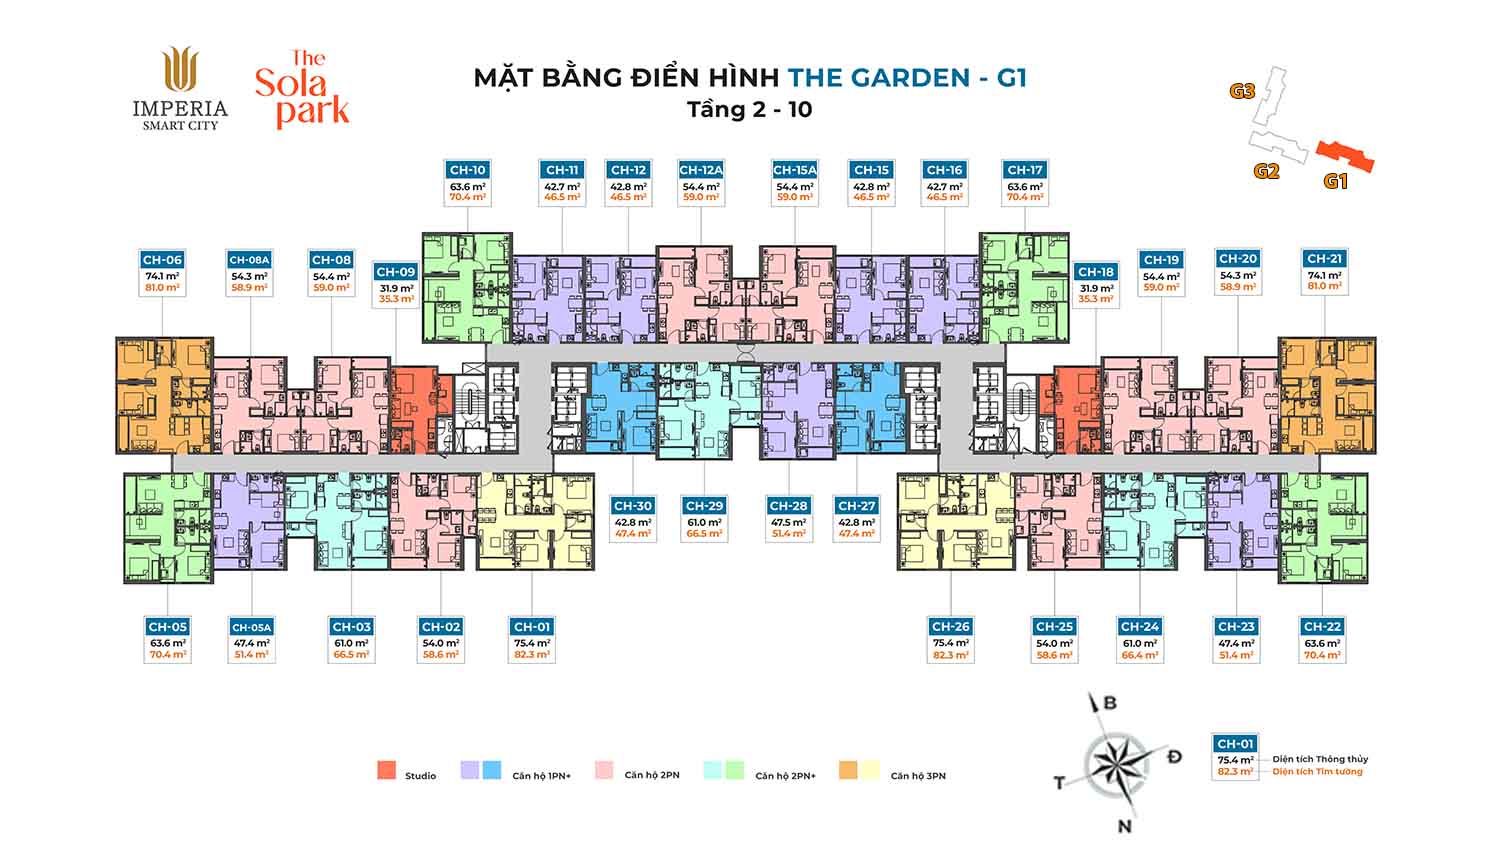 G1-the-Garden-mat-bang-tang-dien-hinh-tang-2-10-Imperia-Smart-City-2-The-Sola-Park-W1500